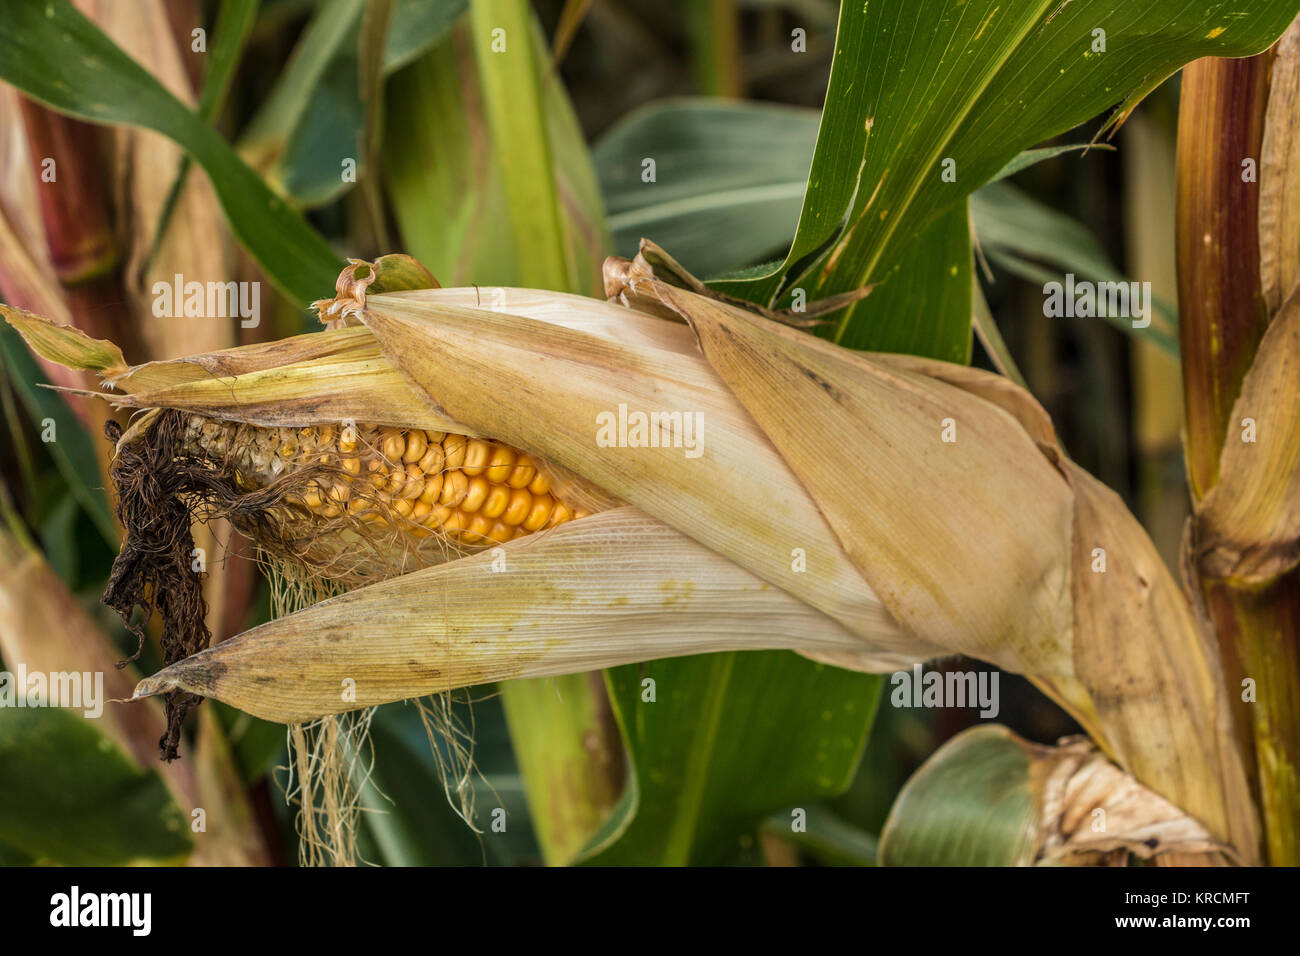 Big green corn field with yellow corncob Stock Photo